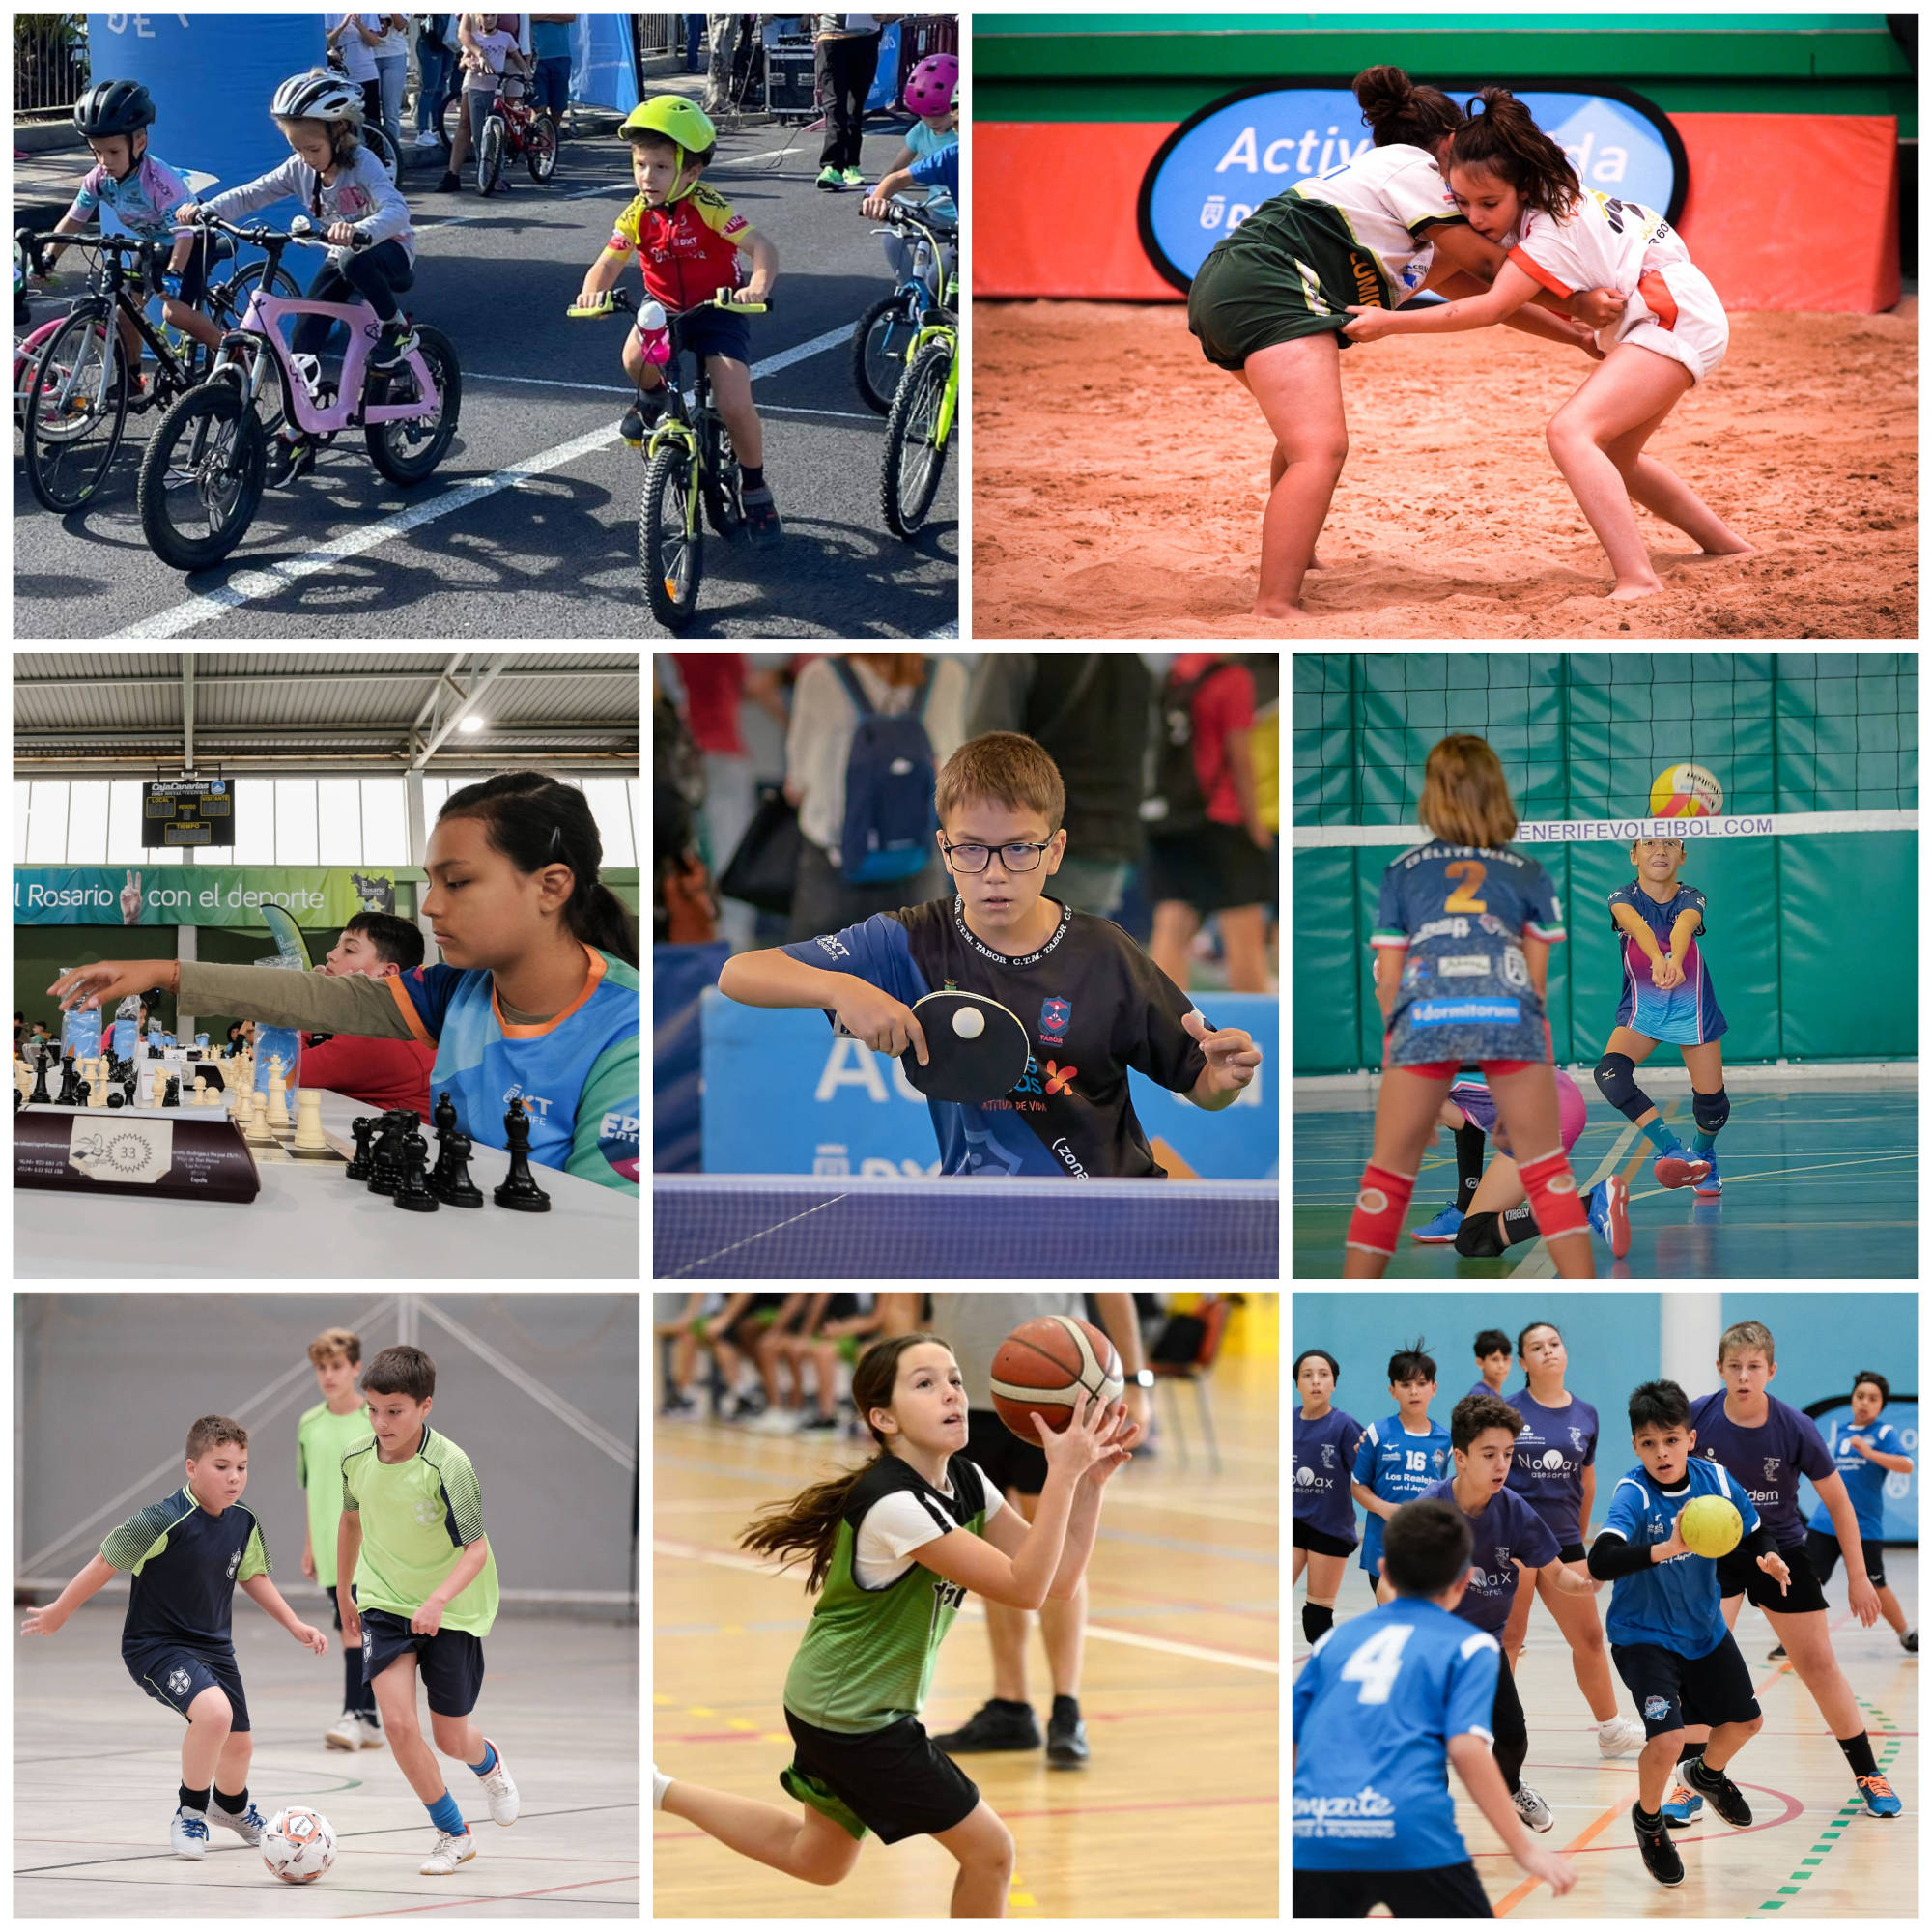 Los Juegos Cabildo programan ocho modalidades deportivas para este fin de semana